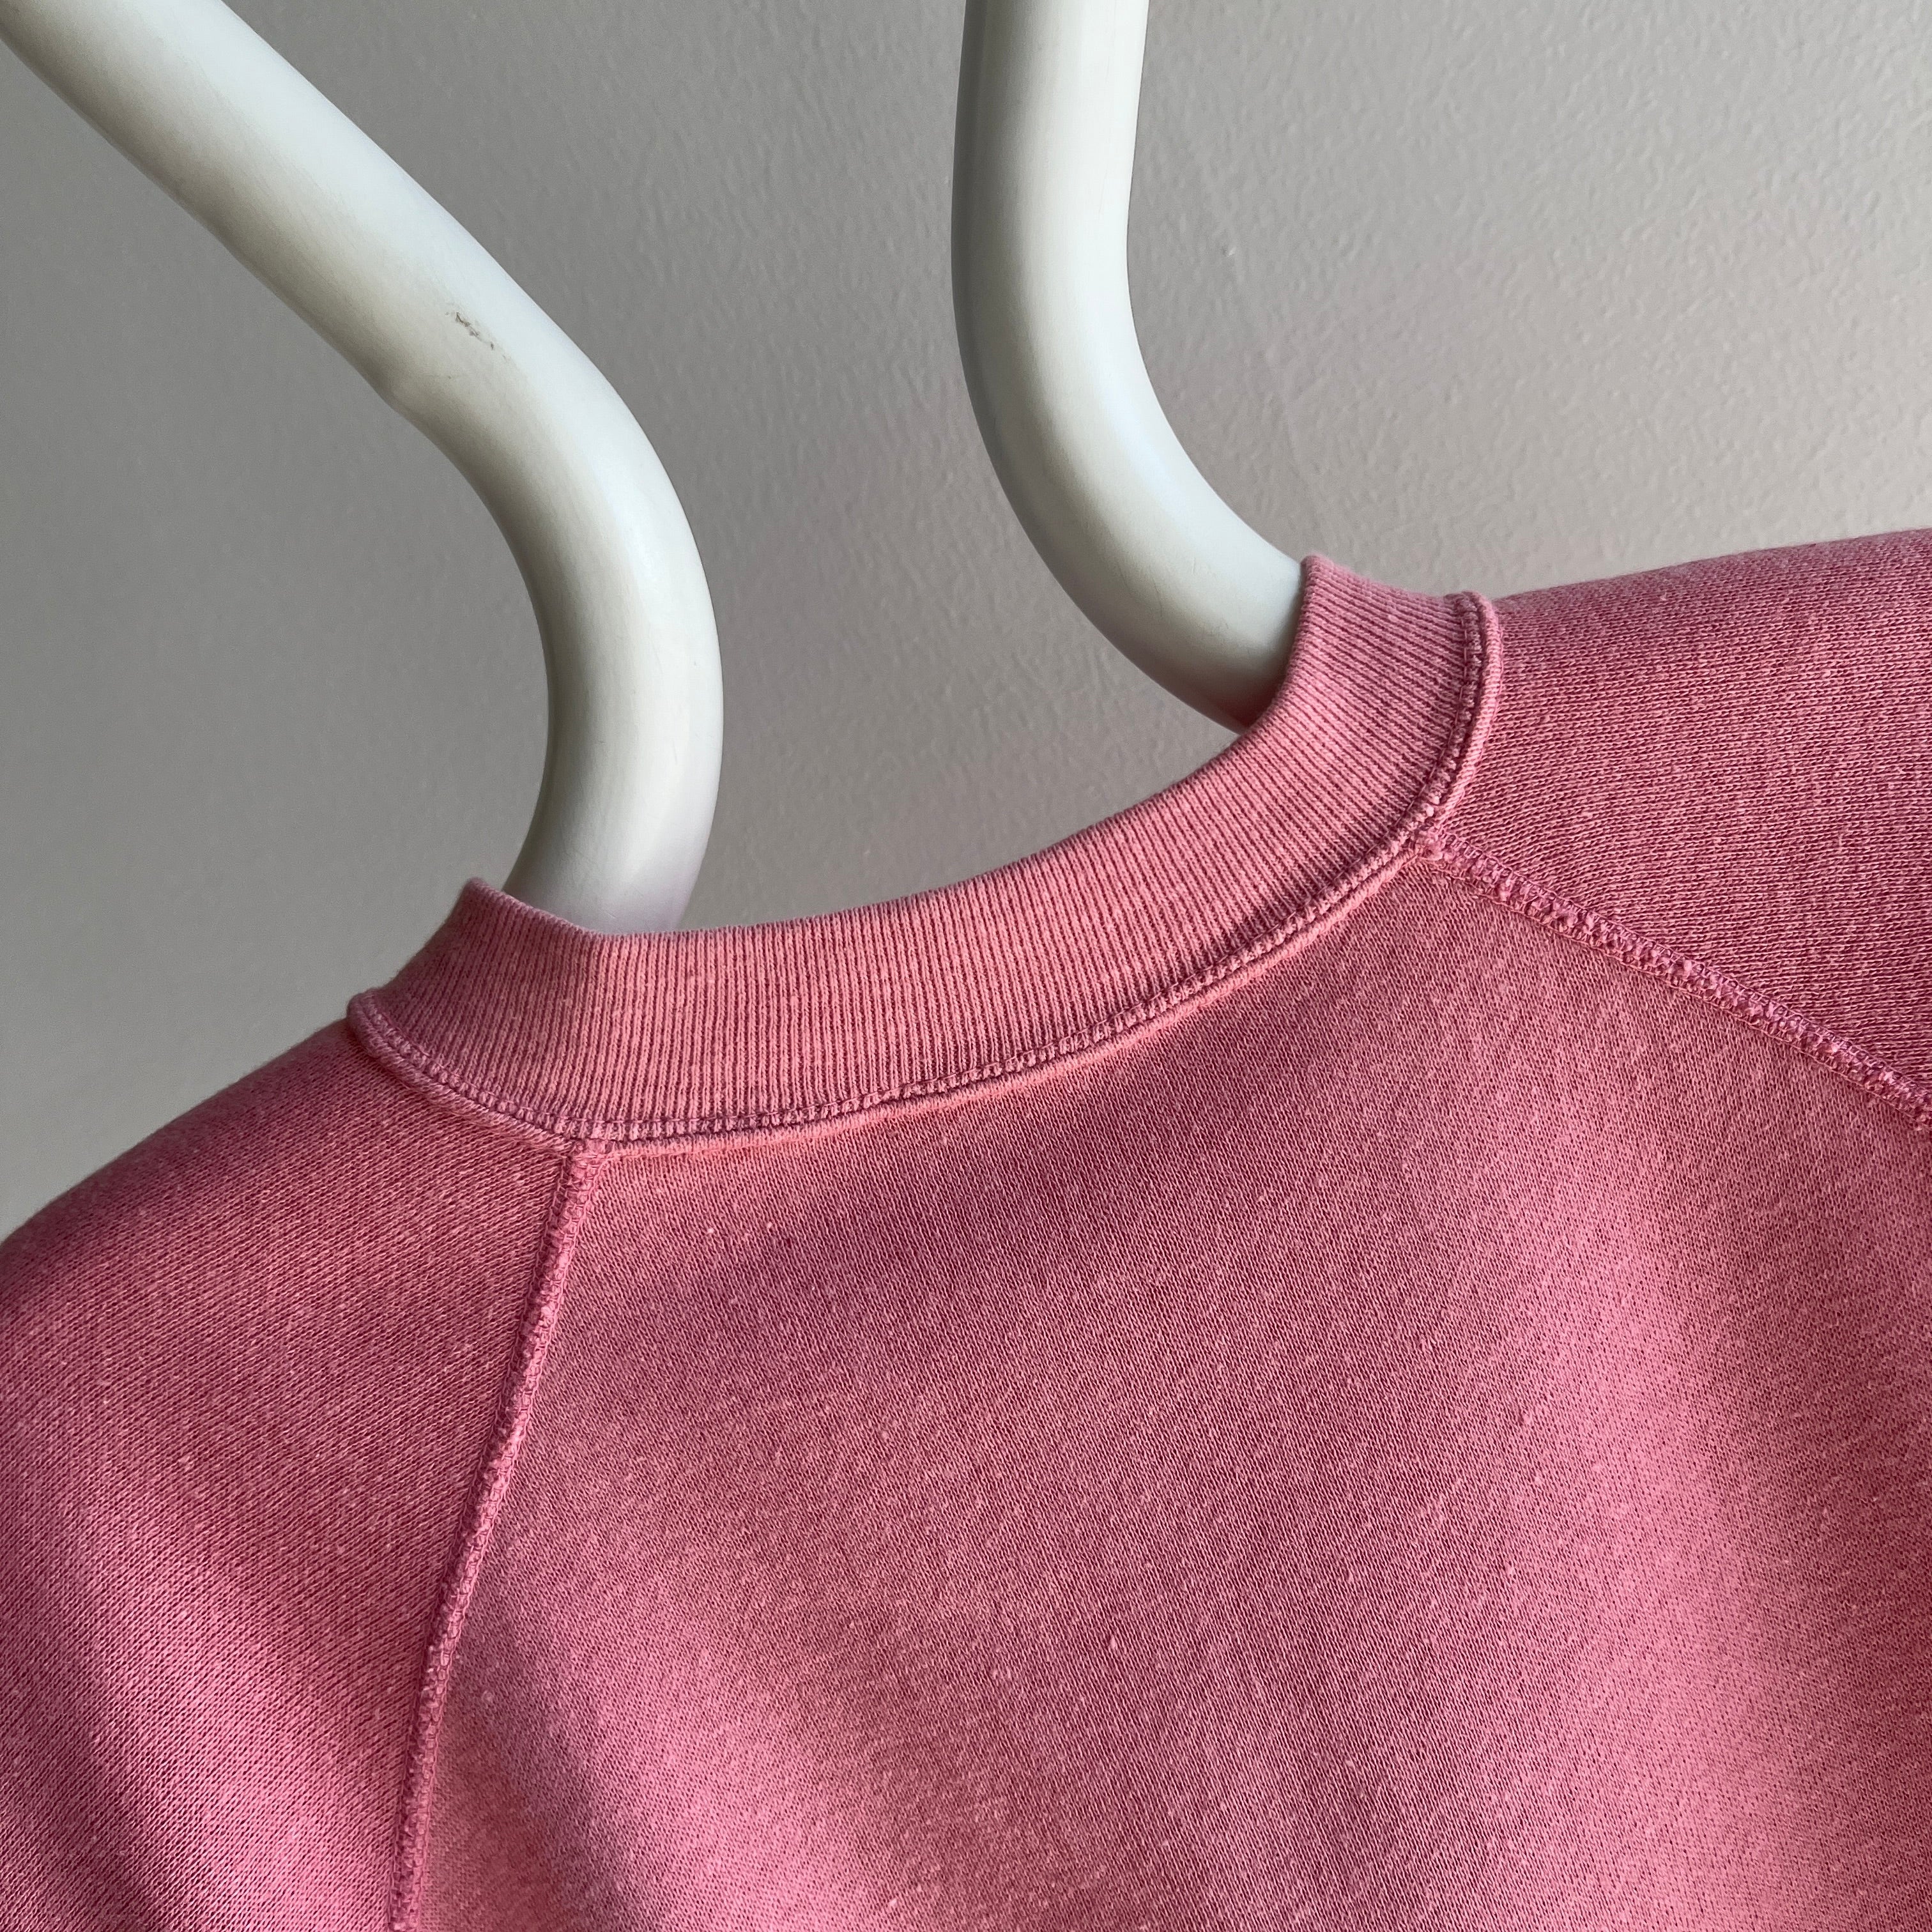 1980s Super Soft and Fleecy Bridesmaids Pink DIY Warm Up Sweatshirt